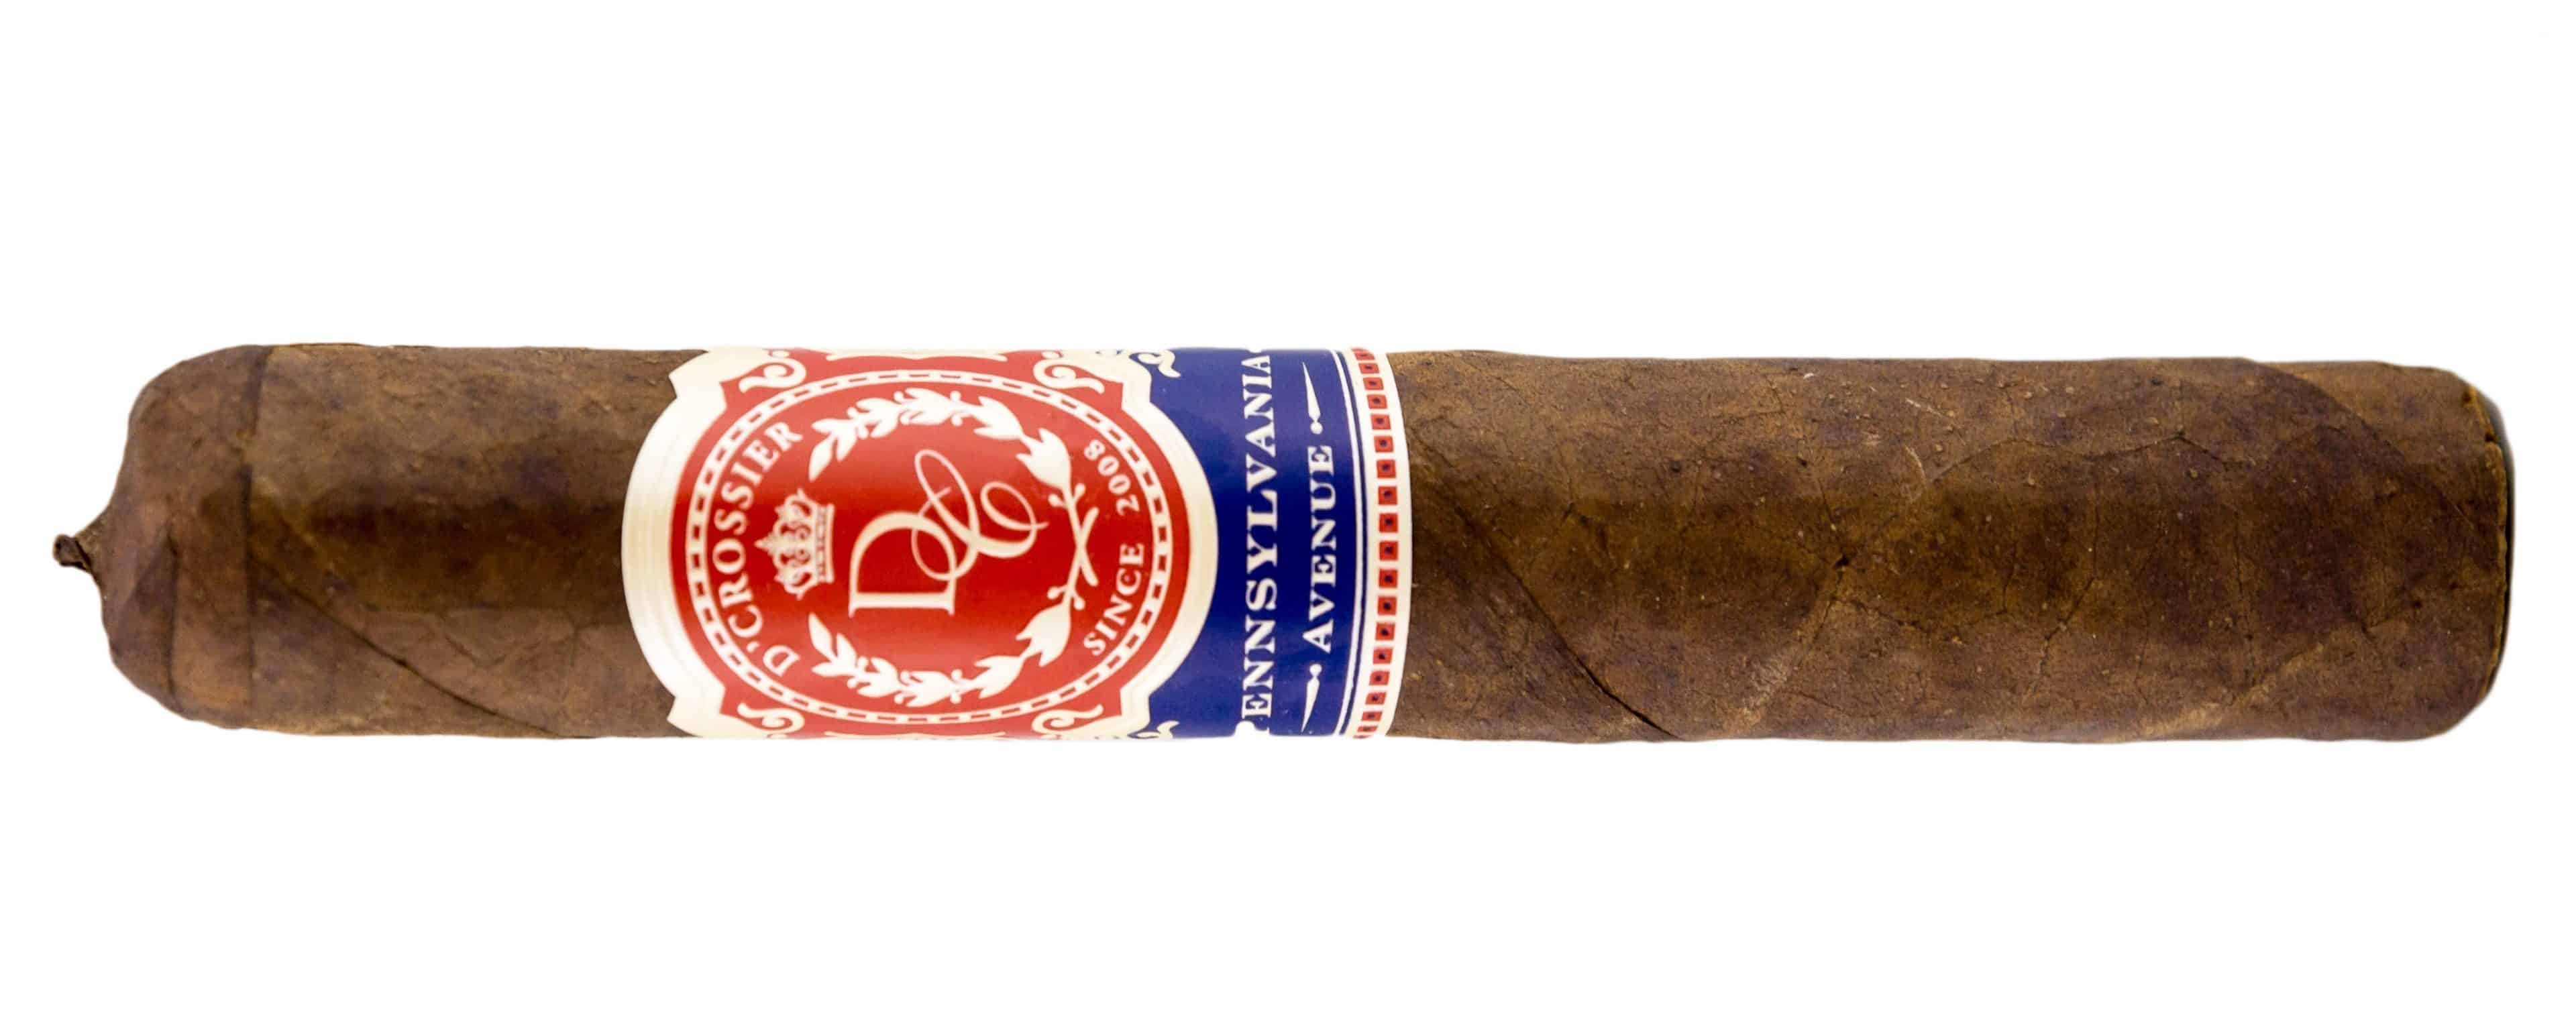 Blind Cigar Review: D'Crossier | Pennsylvania Avenue Robusto